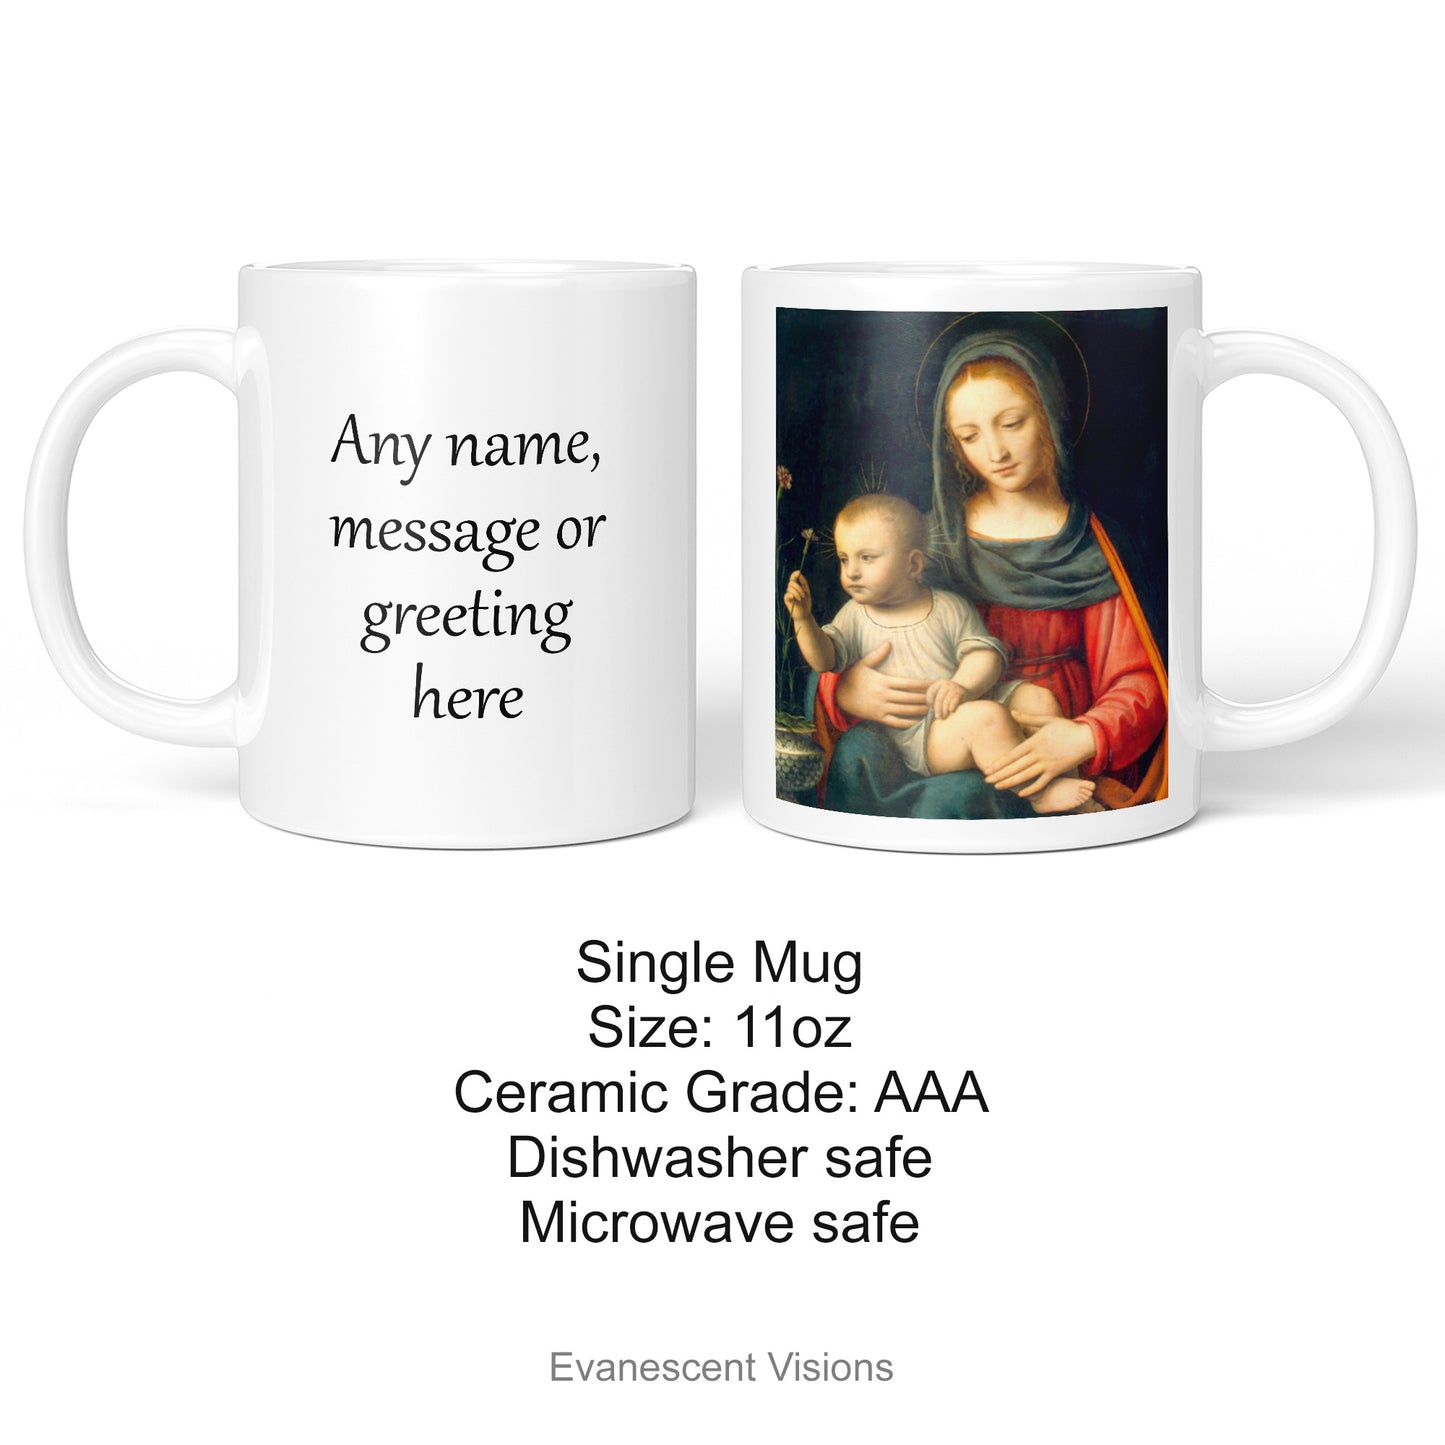 Fine Art Madonna and Child Religious Mug product details